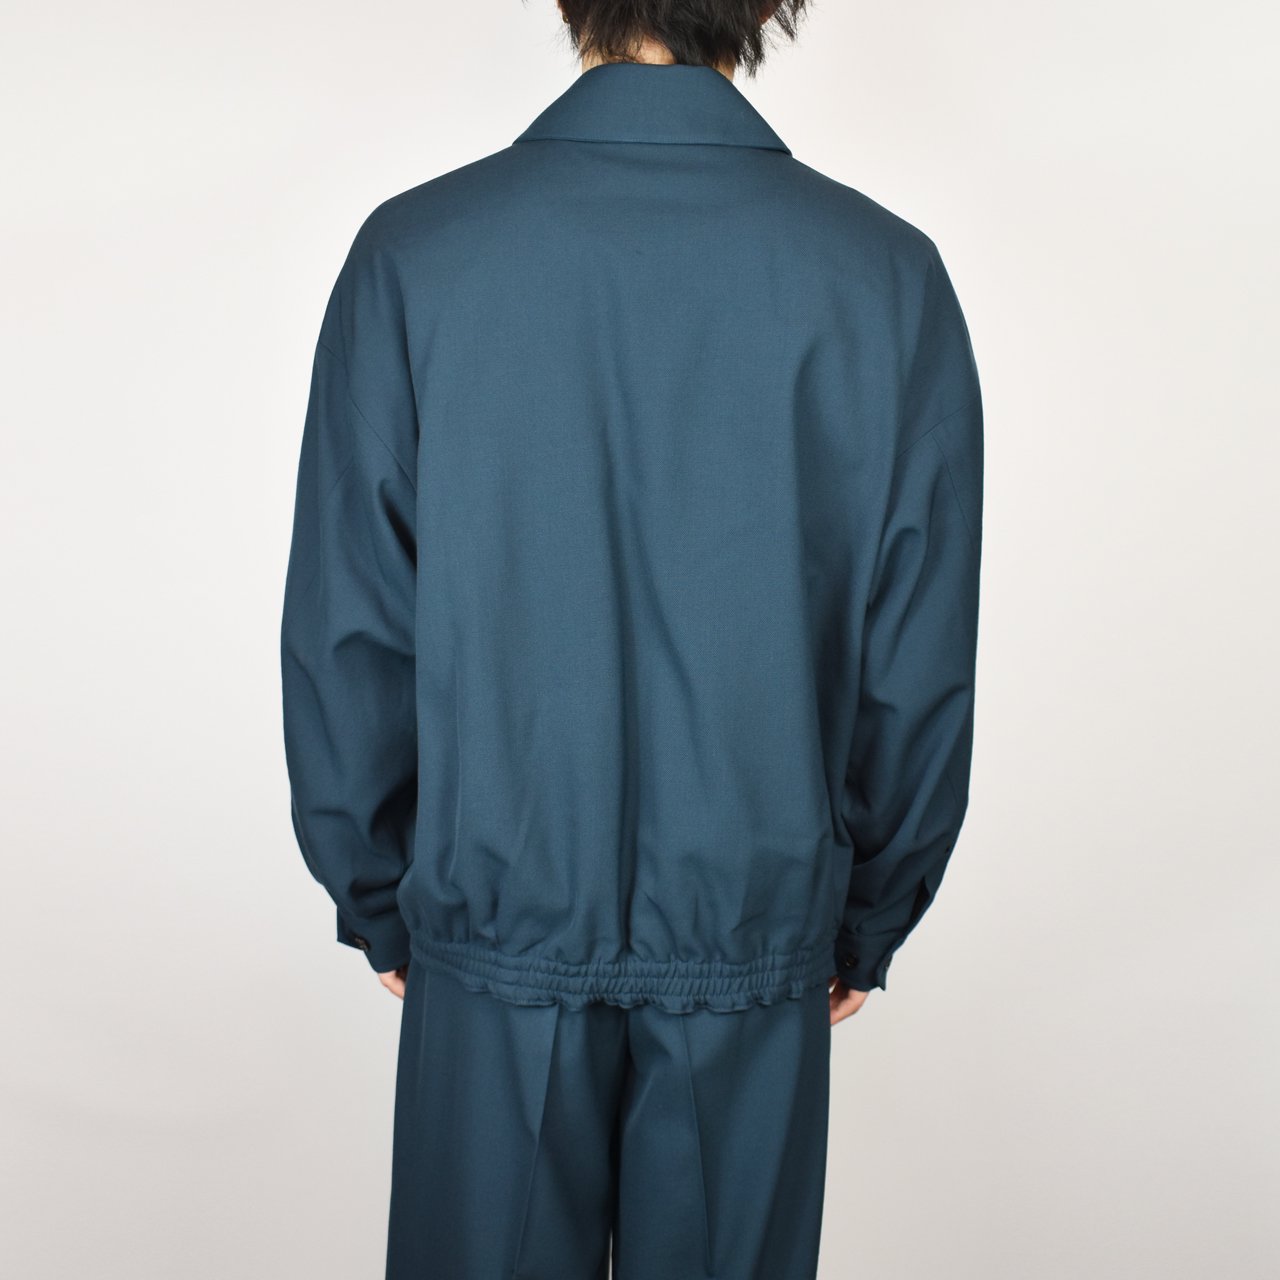 MARKAWARE (マーカウェア)23FW/秋冬 WIDE SPORTS JACKET GREEN -ORGANIC WOOL SURVIVAL CLOTH-